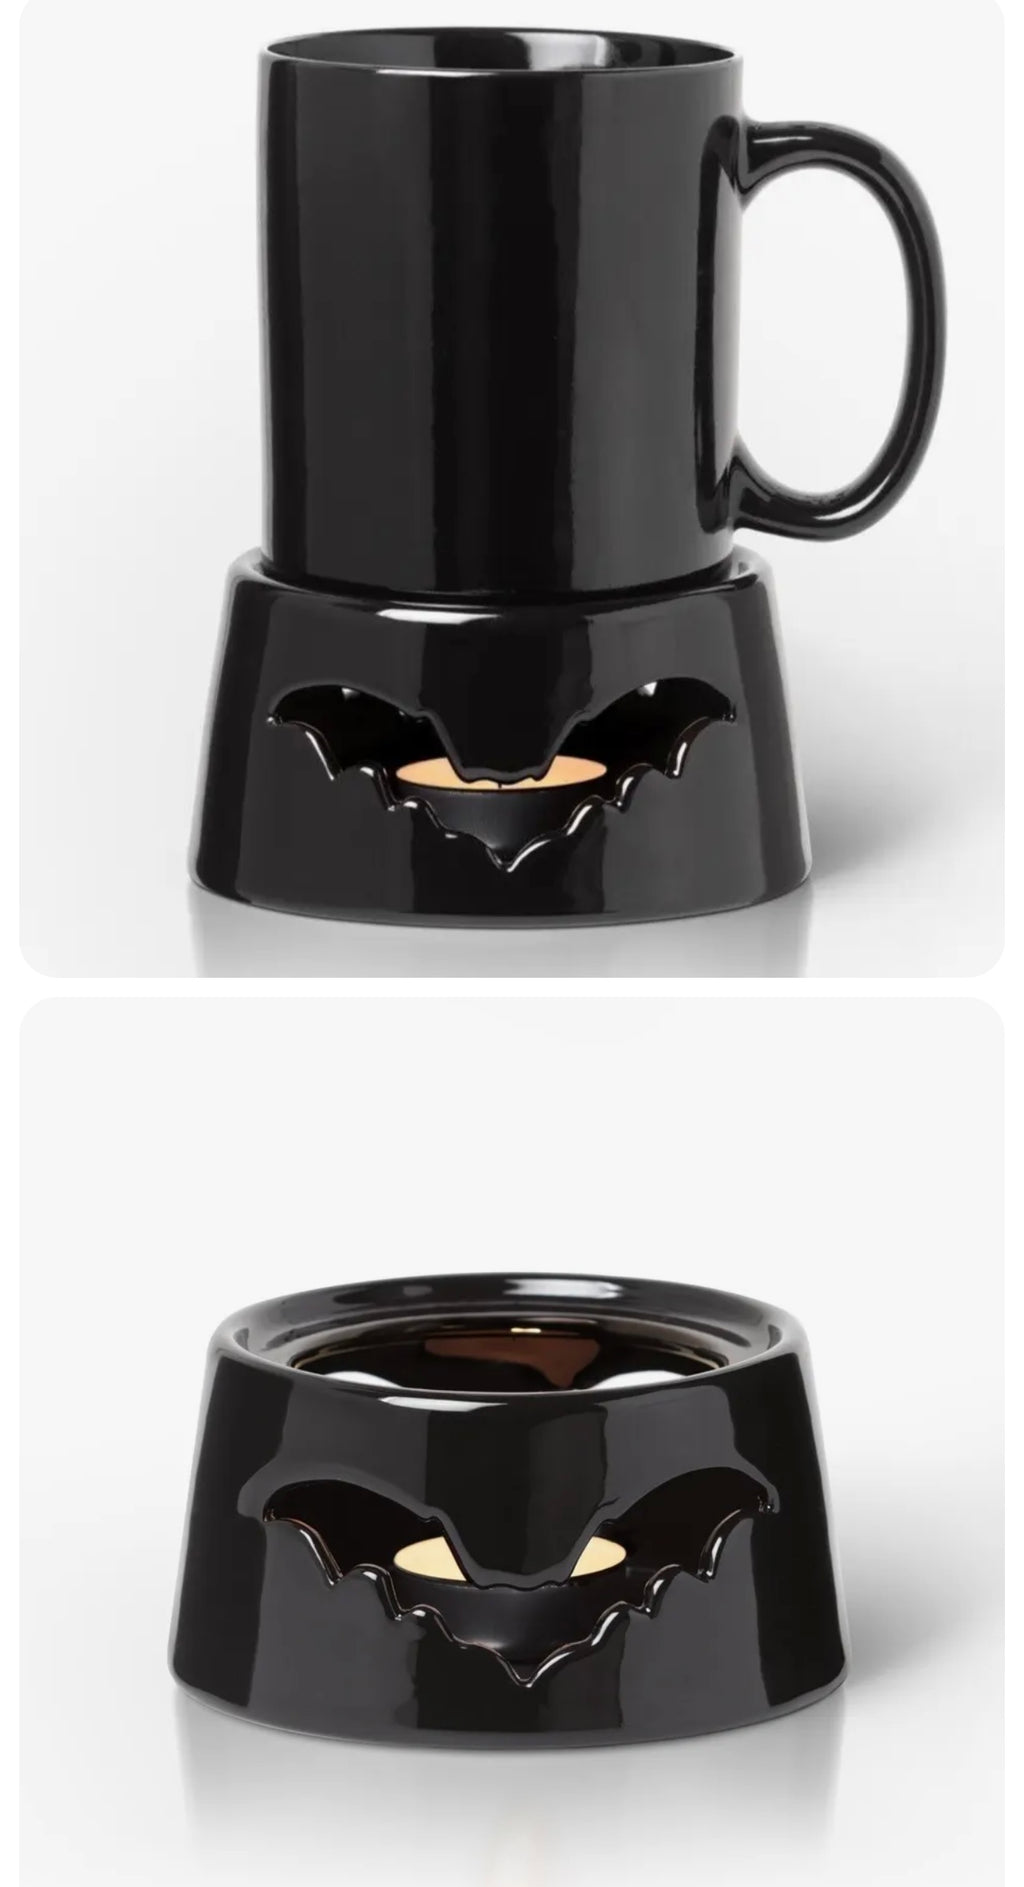 Bat cutout tealights mug warmer with mug